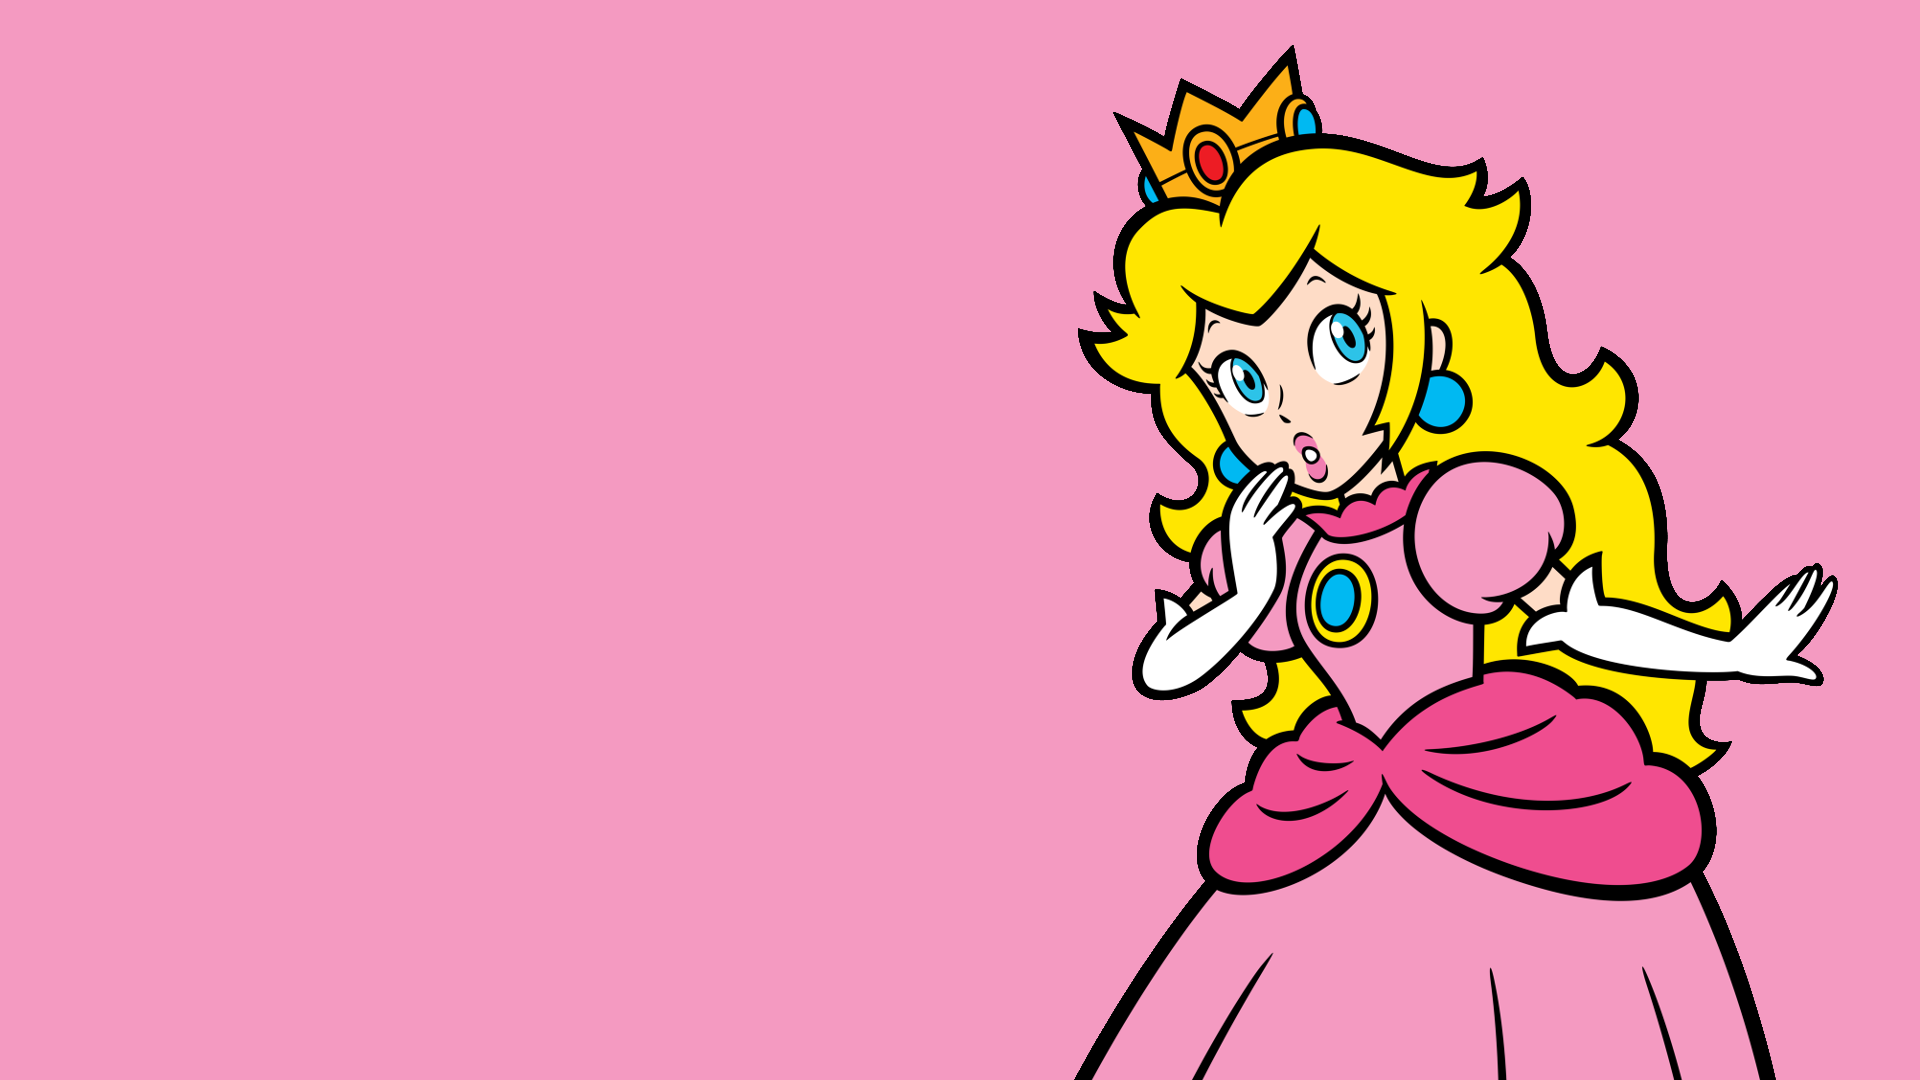 General 1920x1080 video games pink background fantasy girl simple background Princess Peach Nintendo video game girls video game characters blonde pink dress